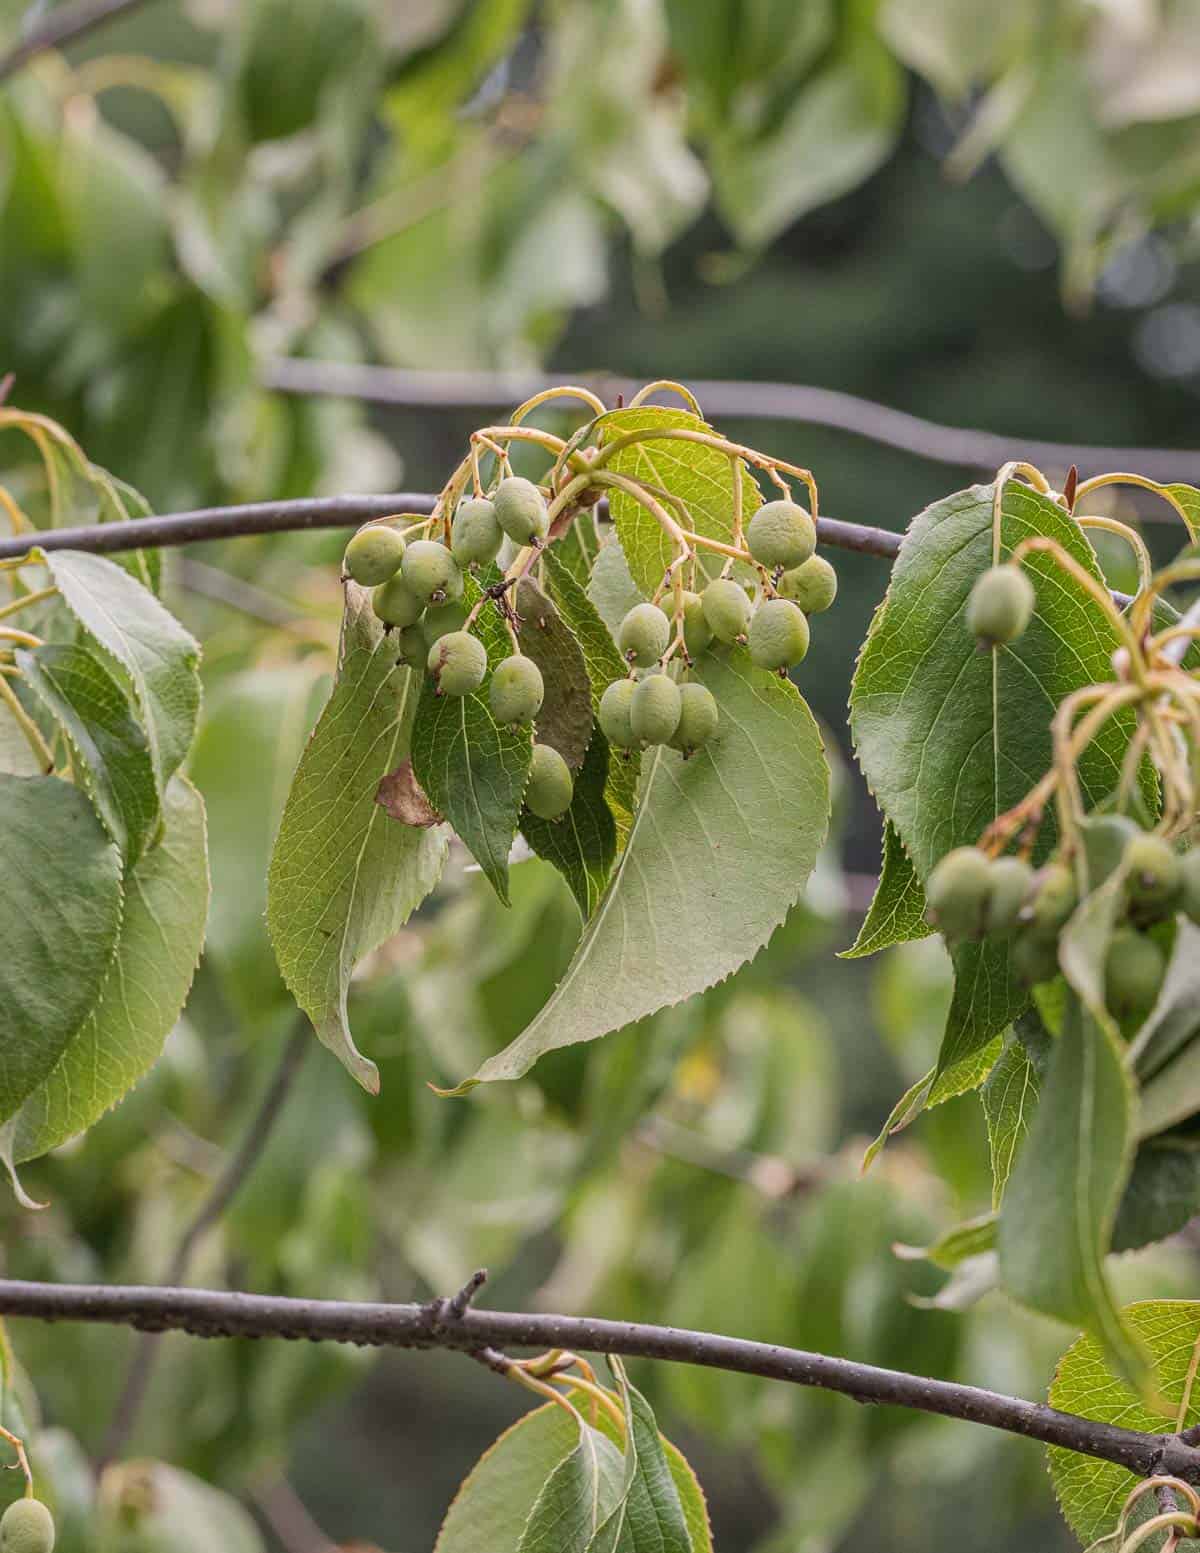 Green, unripe nannyberry fruit (Viburnum lentago) on the shrub.